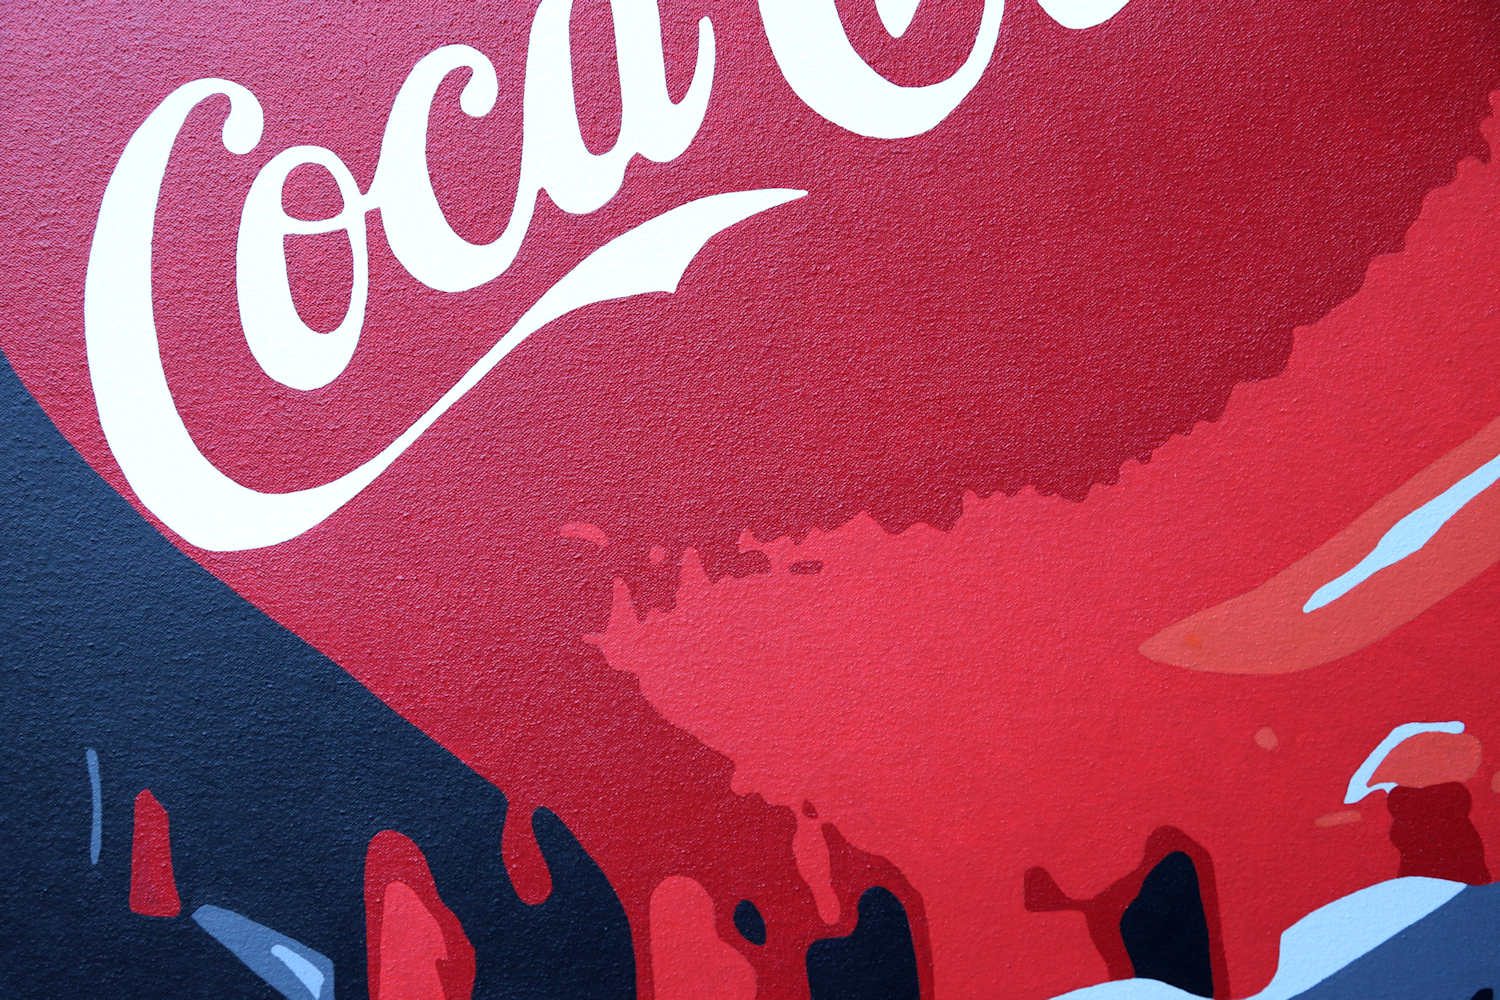 Brand pop art coke painting